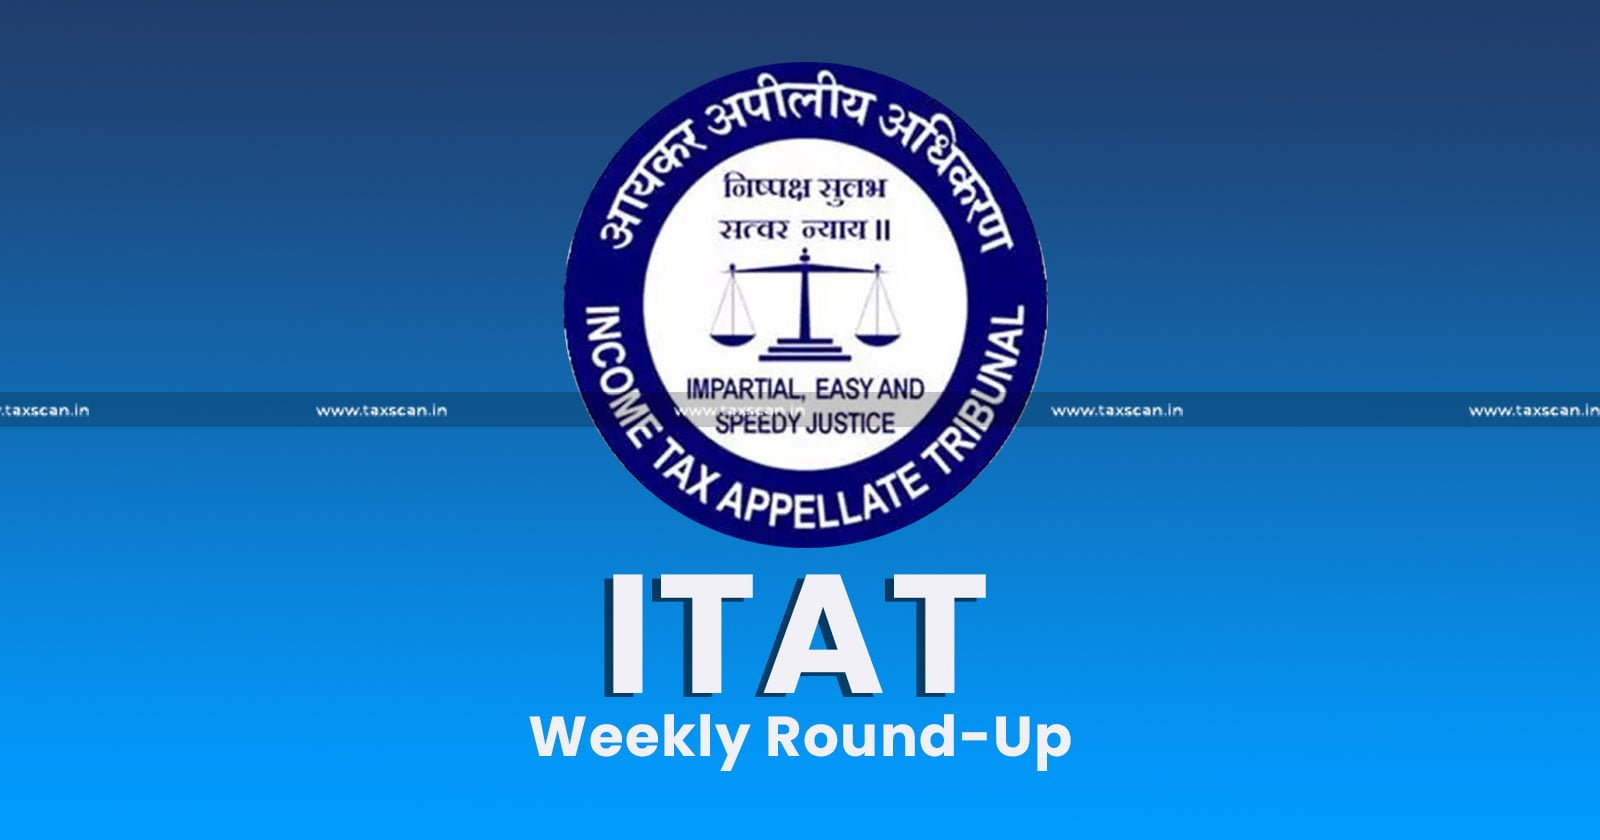 ITAT Weekly Round-up - Weekly Round-up - ITAT Weekly News - Income Tax - taxscan